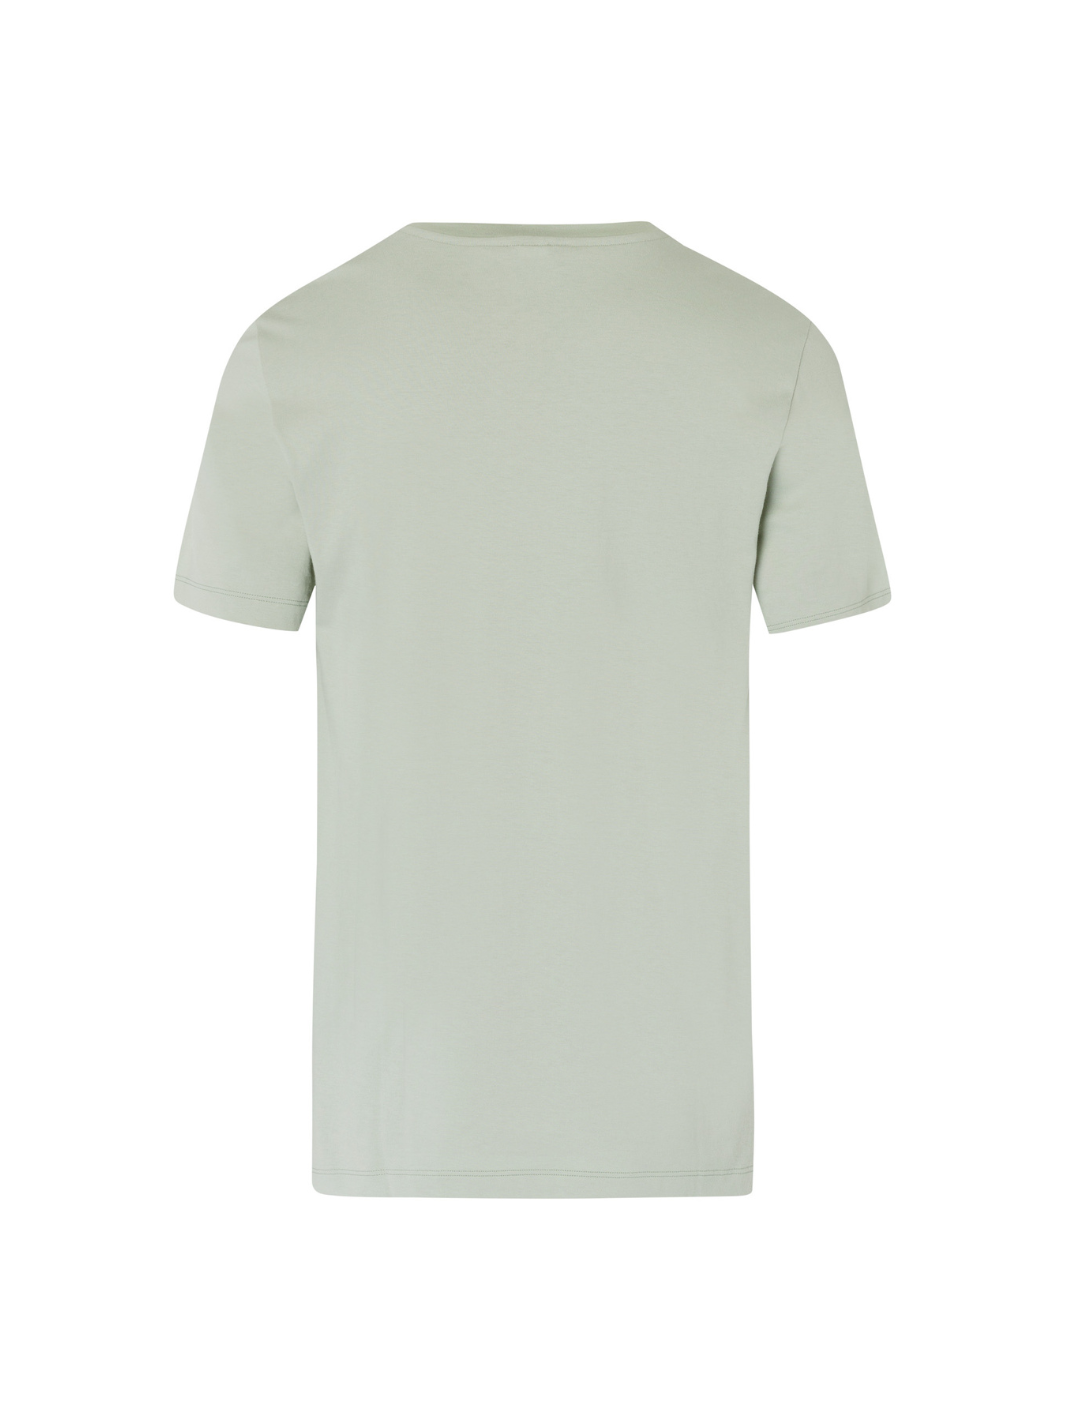 Living Shirts V-Shirt - Mineral Green